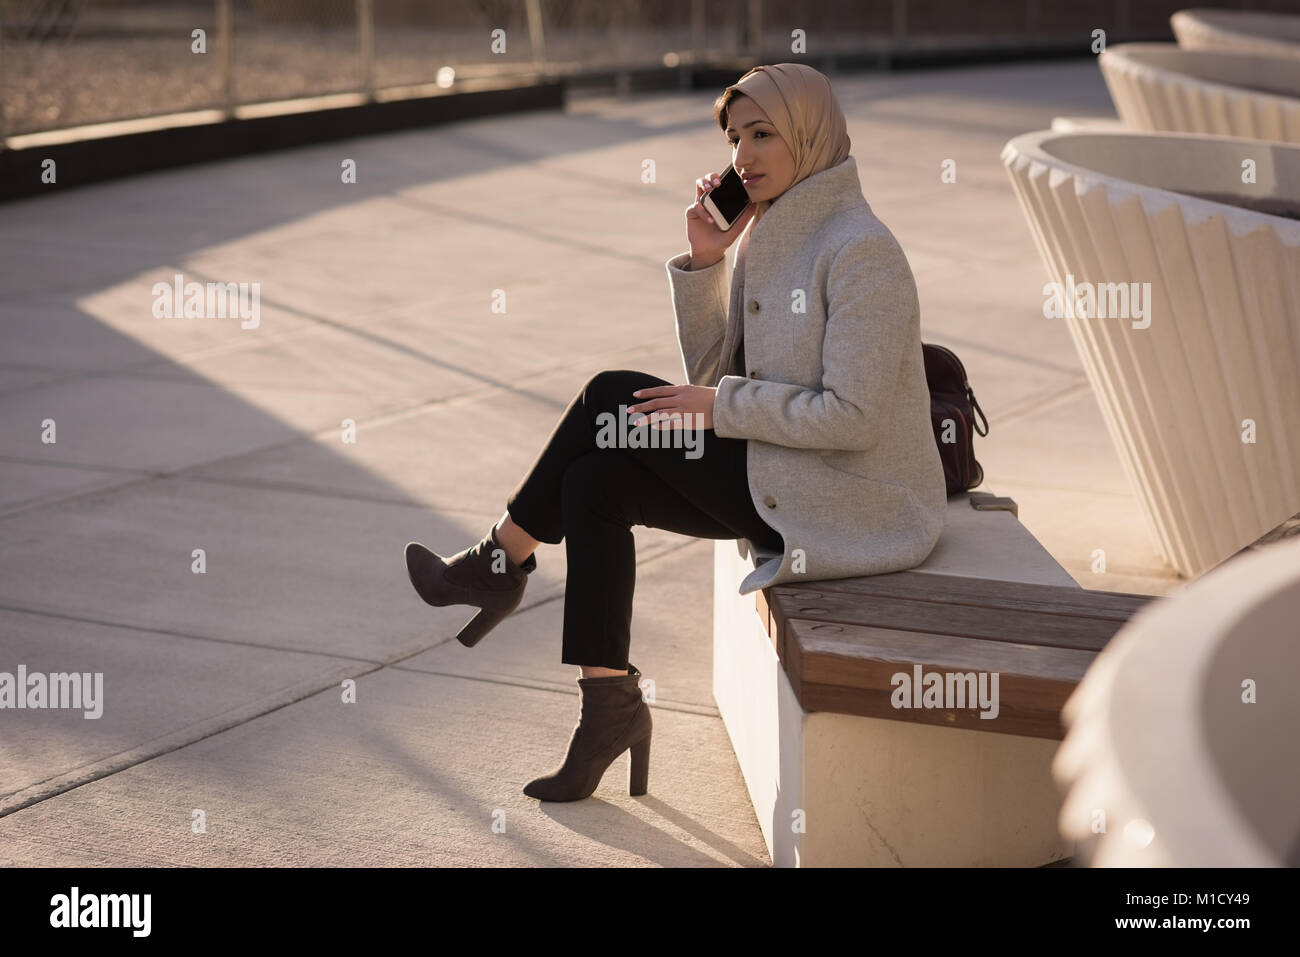 Woman in hijab talking on mobile phone Stock Photo